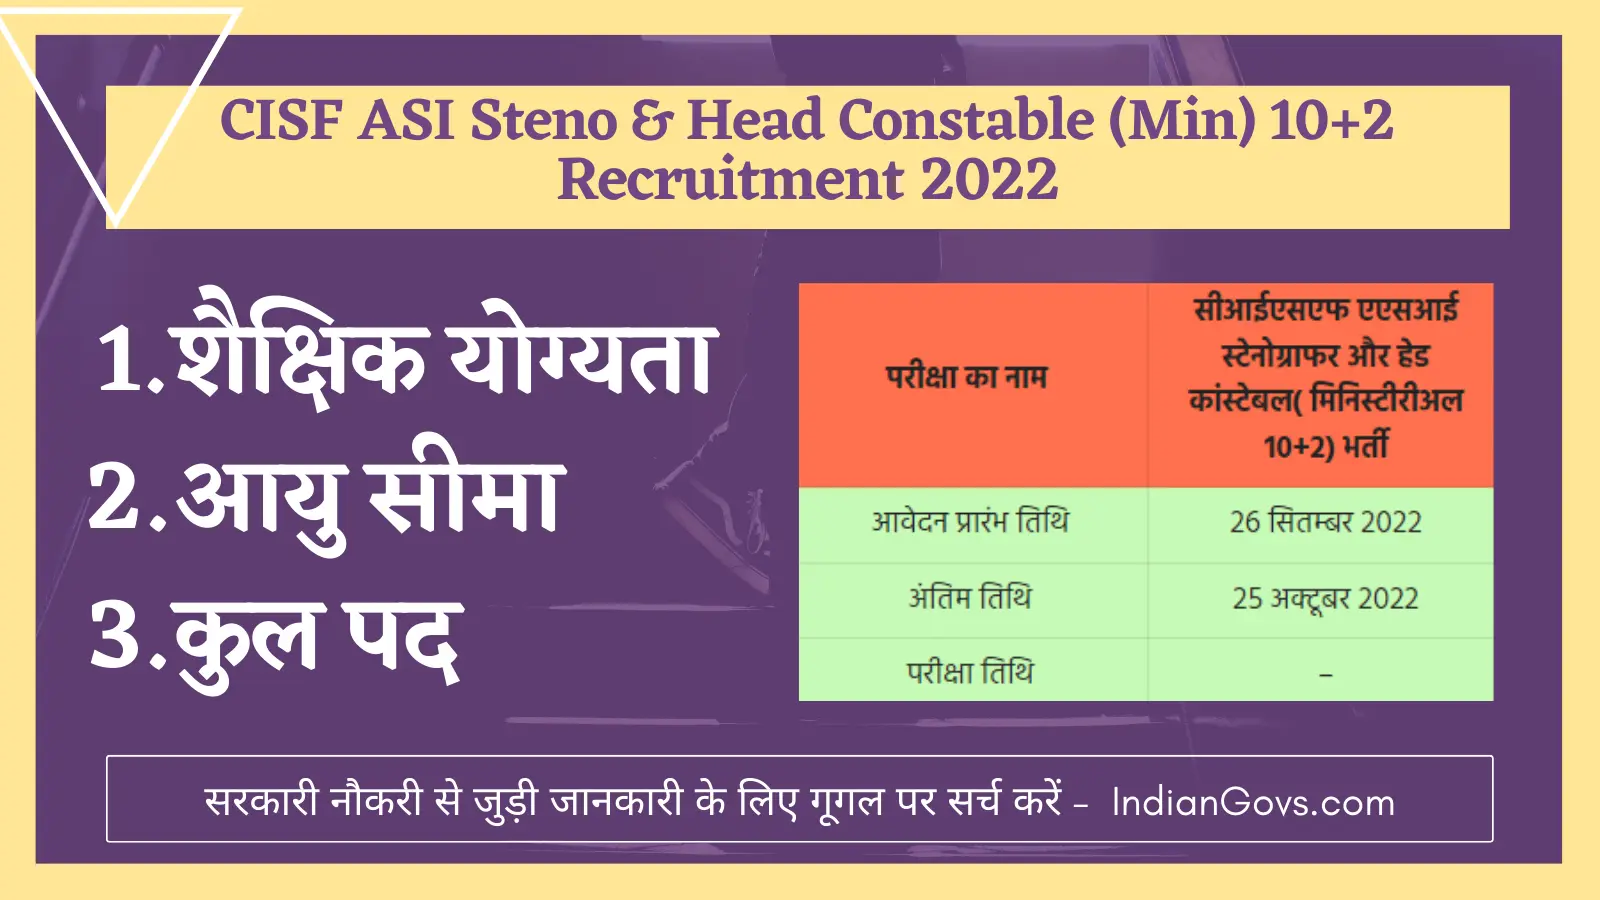 CISF ASI Stenographer & Head Constable (Min) 10+2 Recruitment 2022